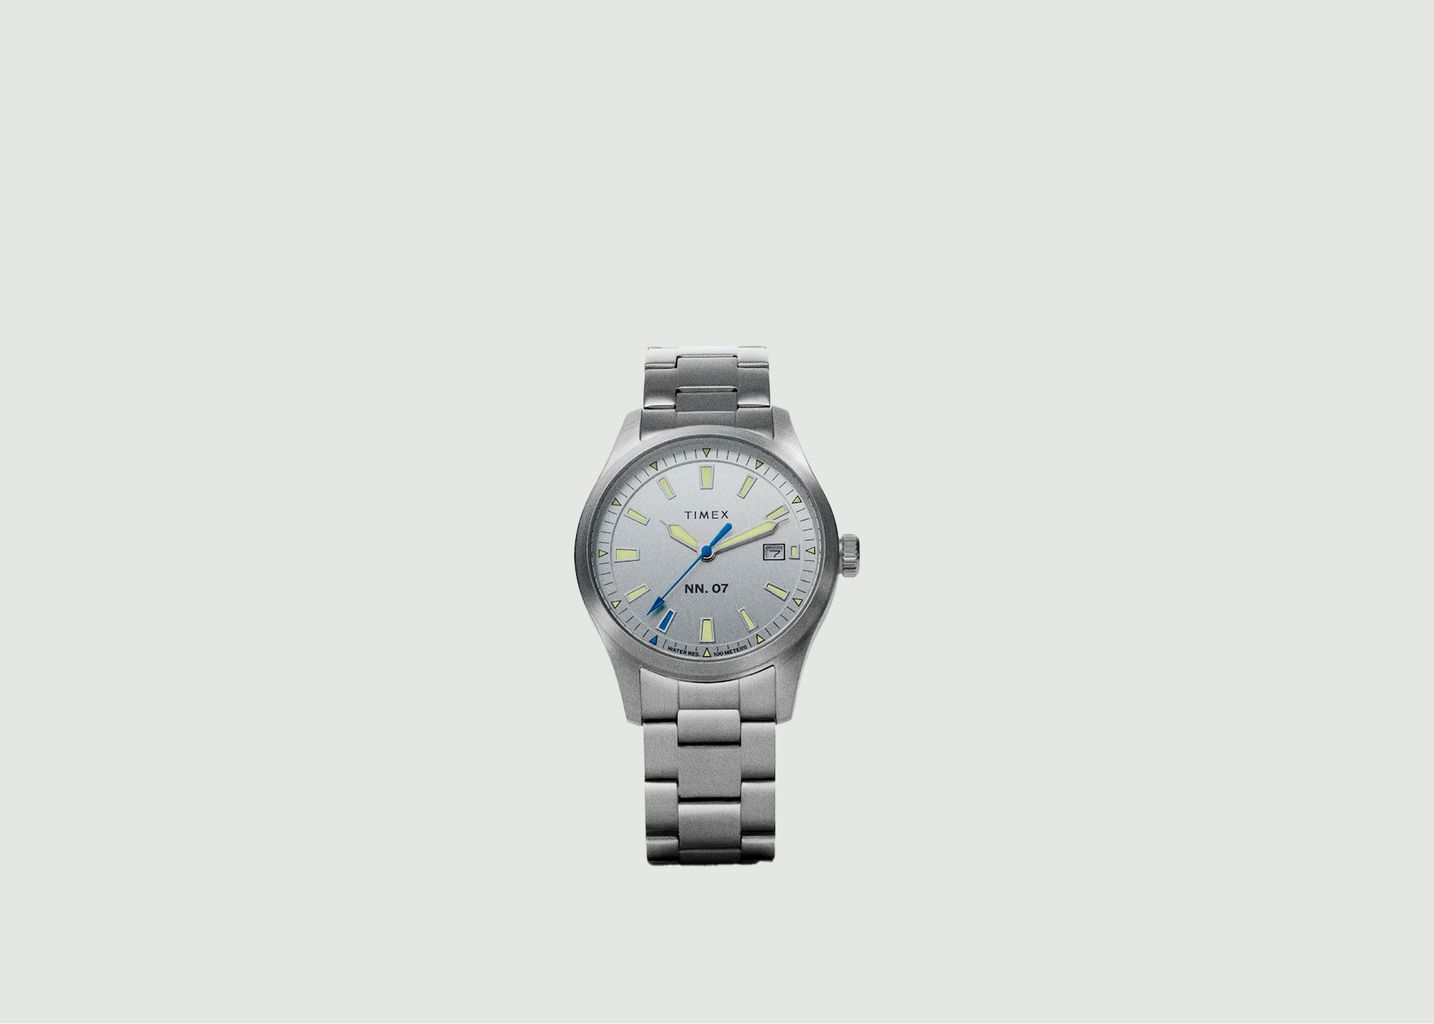 NN07 x Timex stainless steel quartz watch - NN07